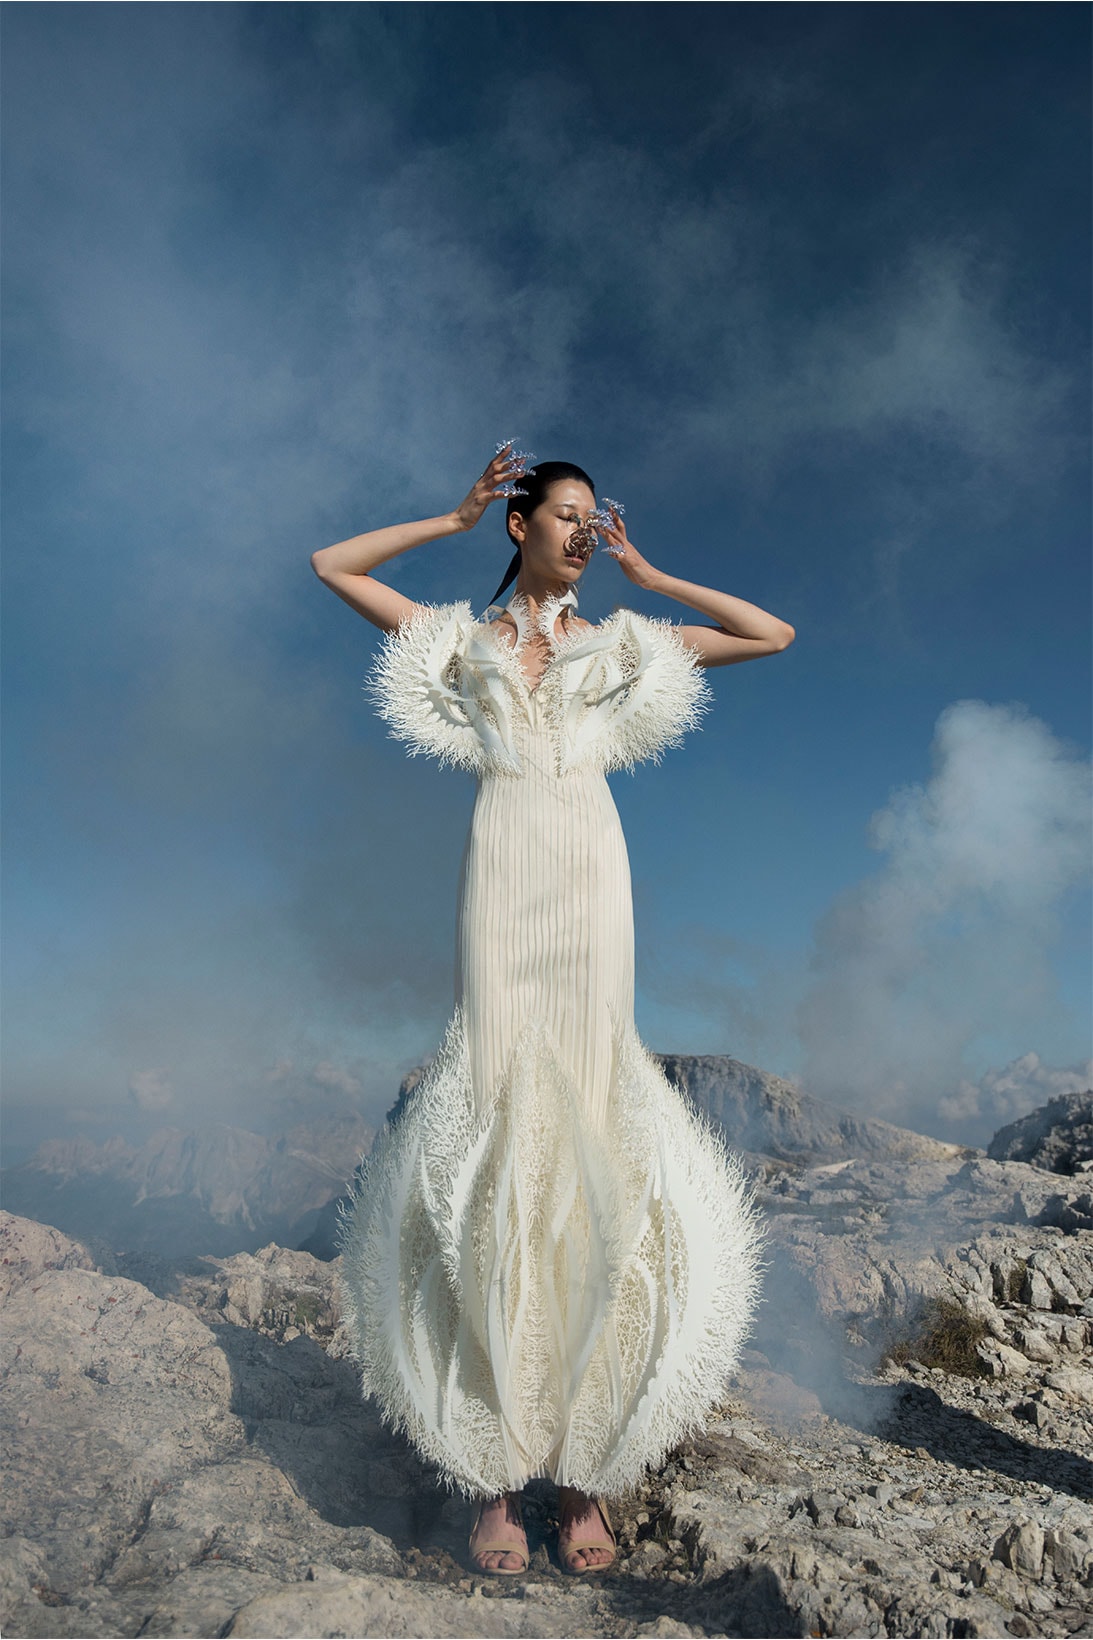 parley iris van herpen earthrise haute couture collaboration dress gown design